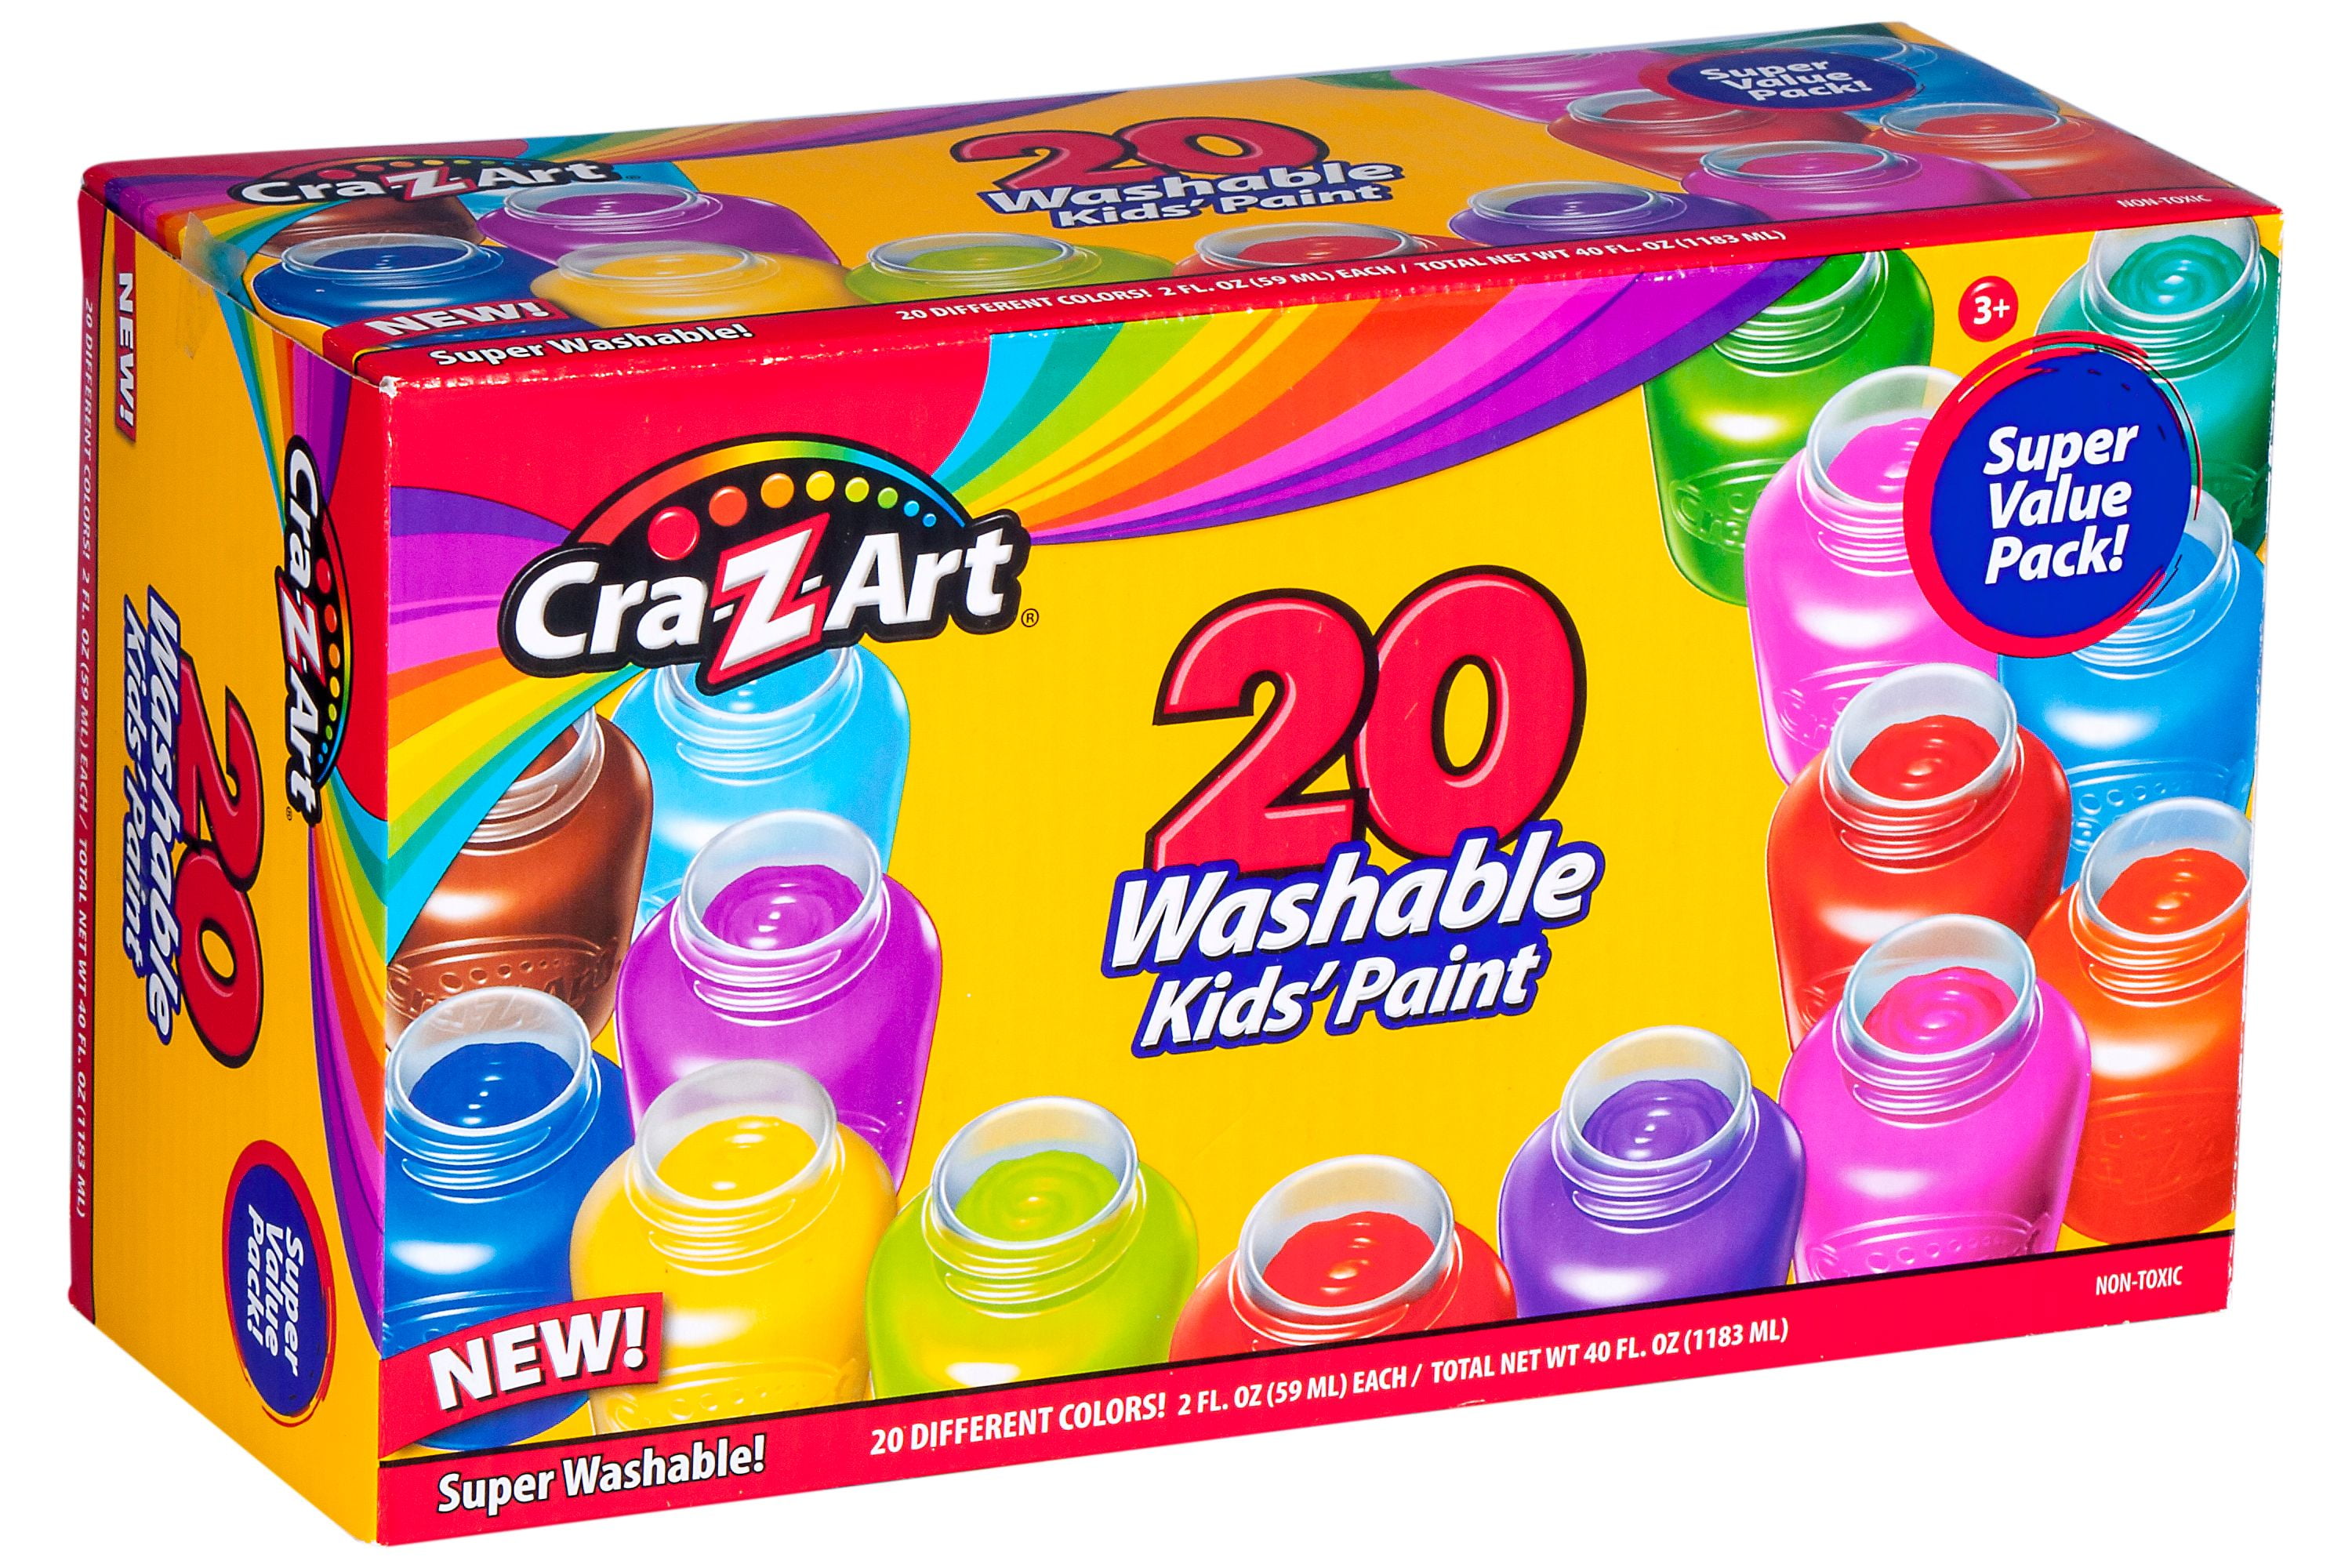 Cra-Z-Art Washable Kids Paint, White, 1 gal Bottle (560386)